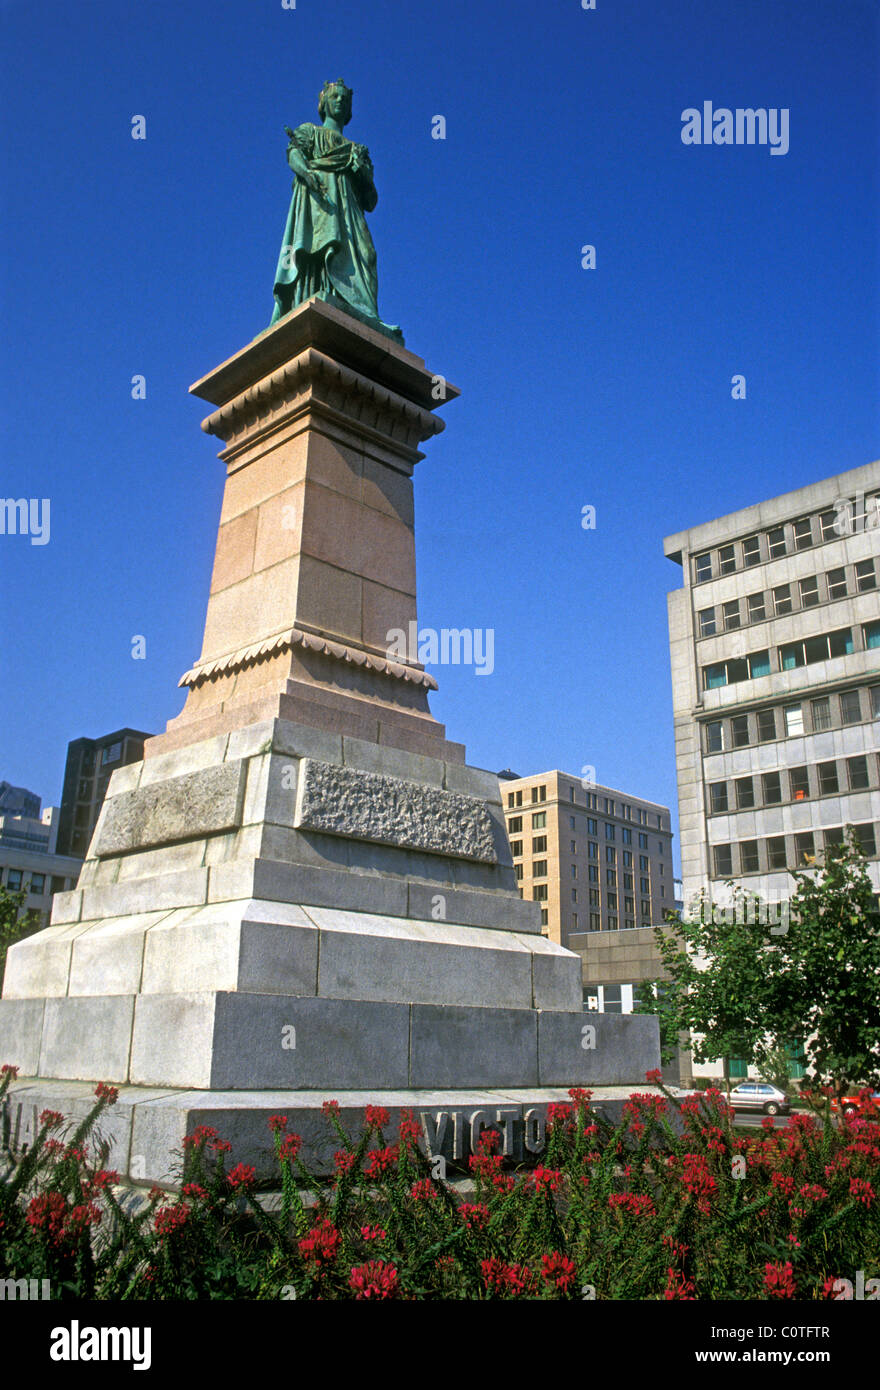 Queen Victoria Monument, Queen Victoria, monument, bronze statue, sculpture, Victoria Square, city of Montreal, Montreal, Quebec Province, Canada Stock Photo